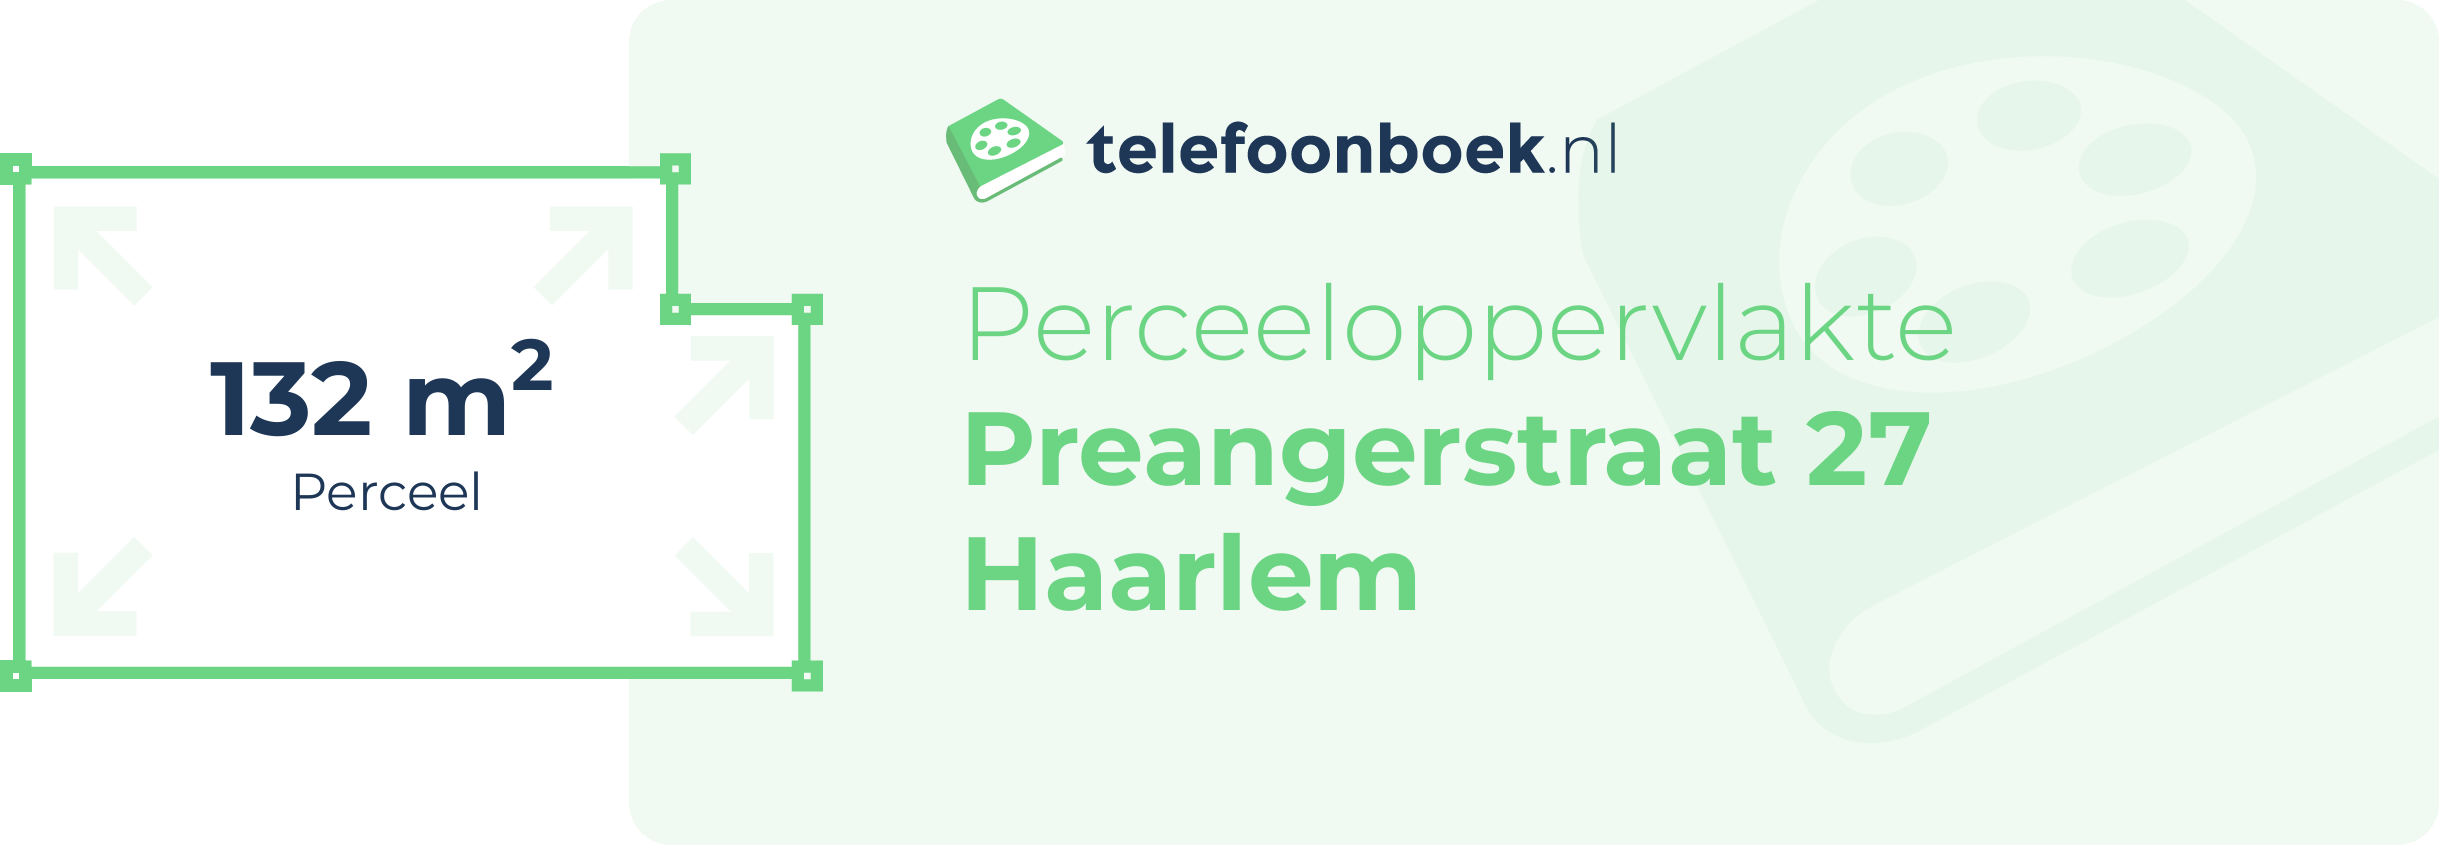 Perceeloppervlakte Preangerstraat 27 Haarlem